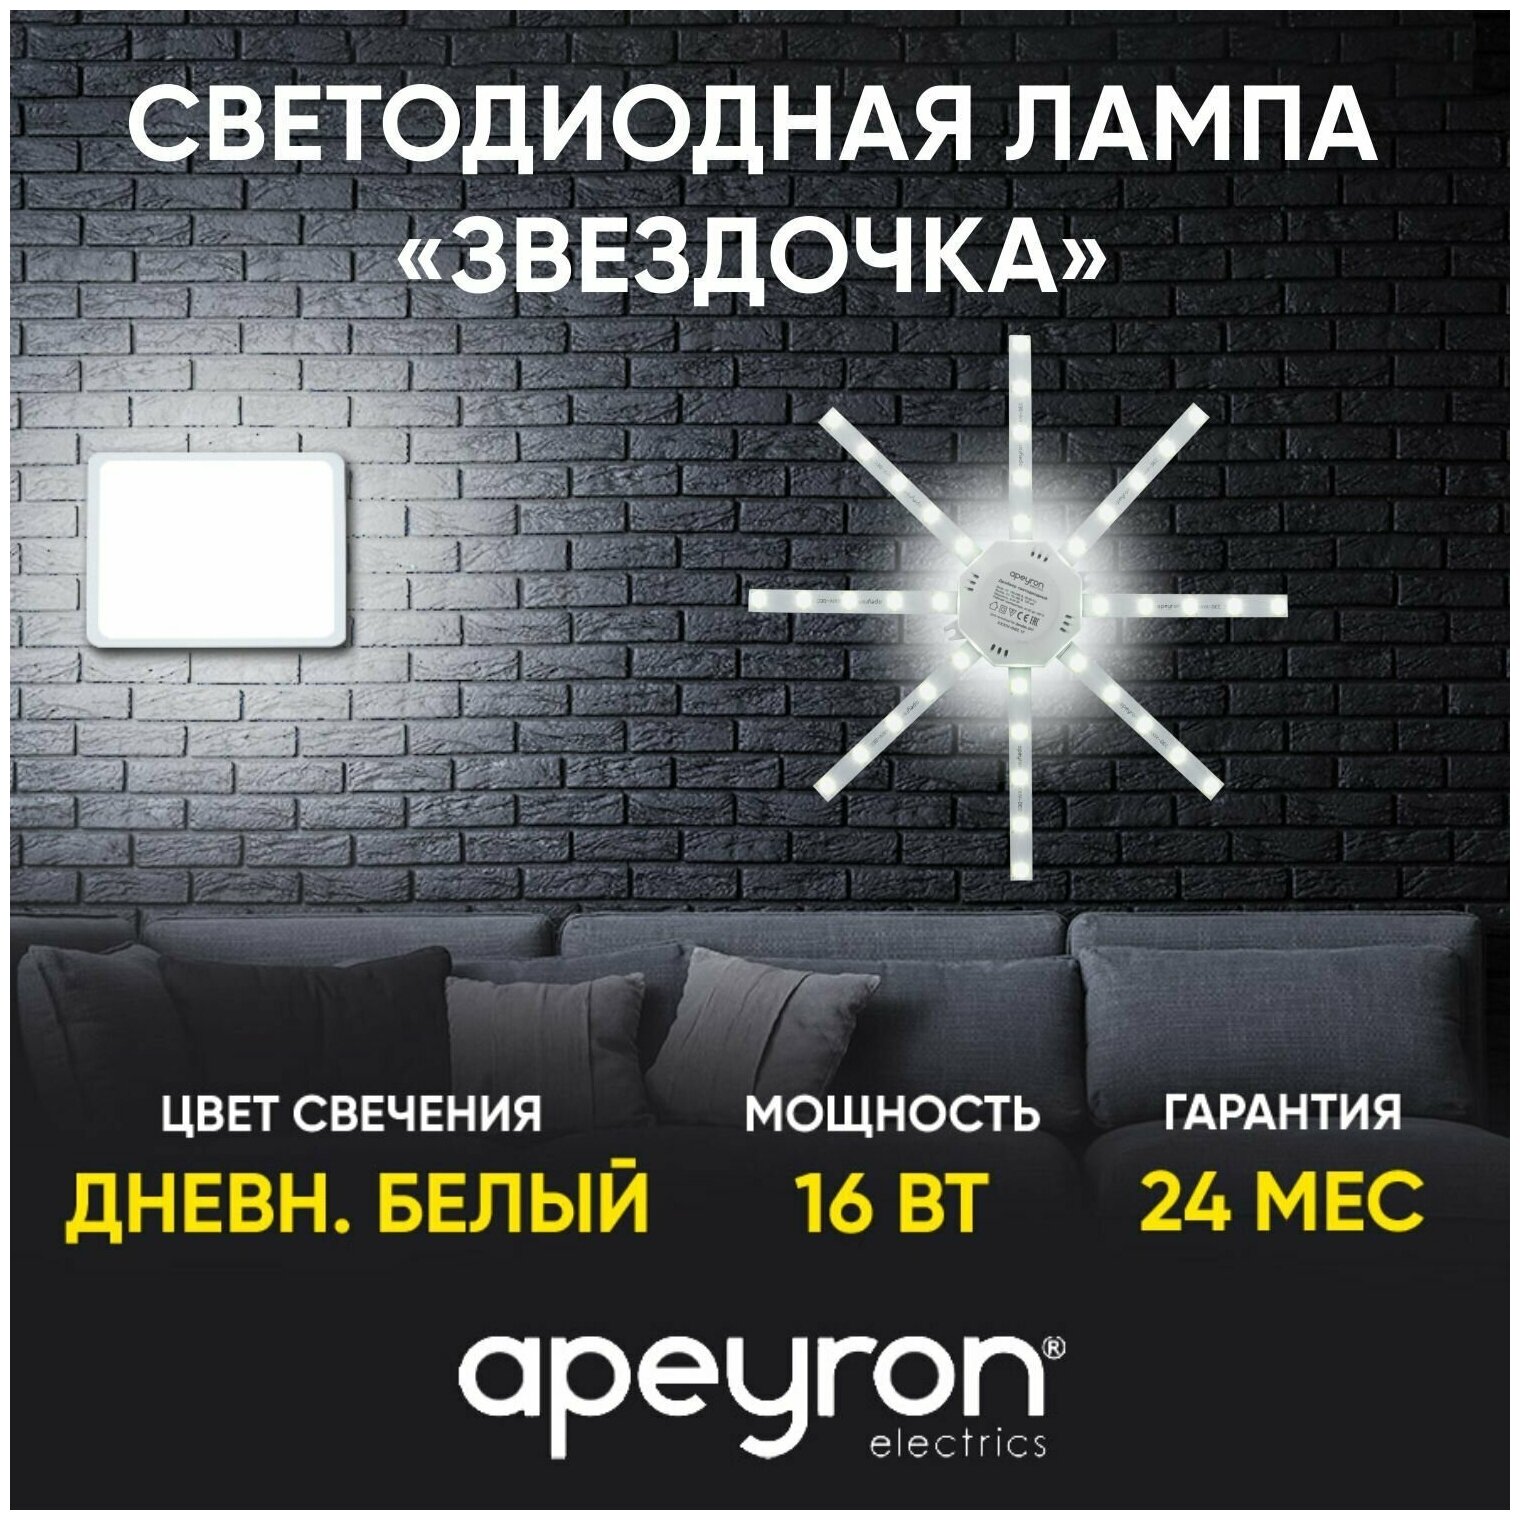 Светодиодный модуль Apeyron Звездочка - фото №1